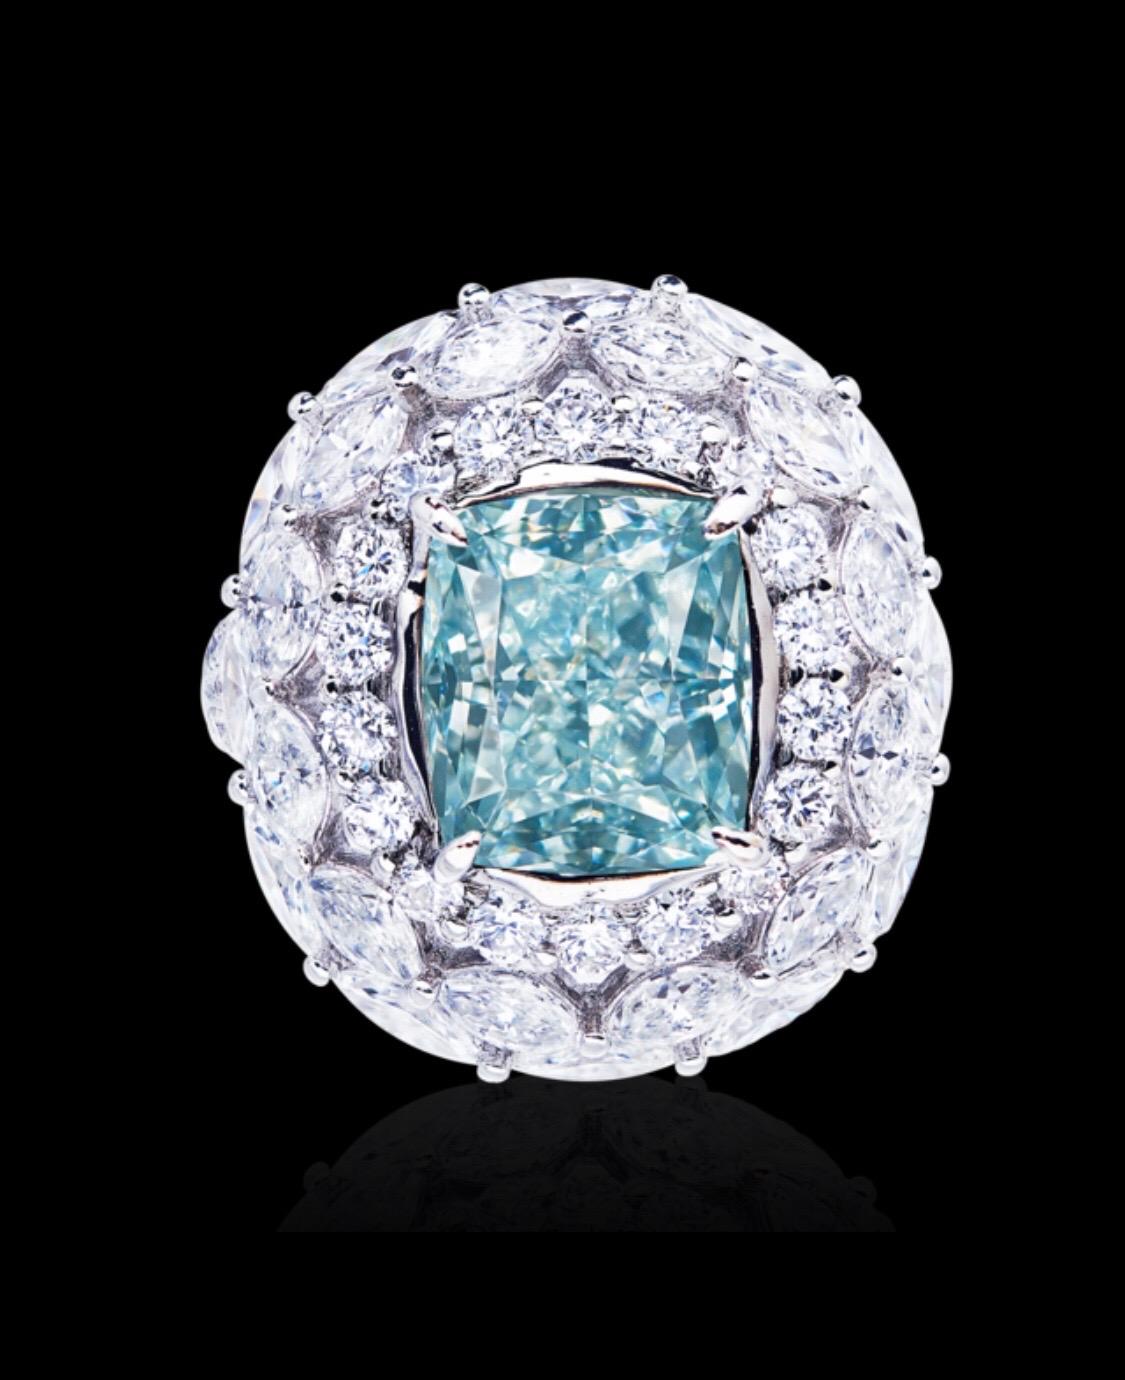 500 carat diamond